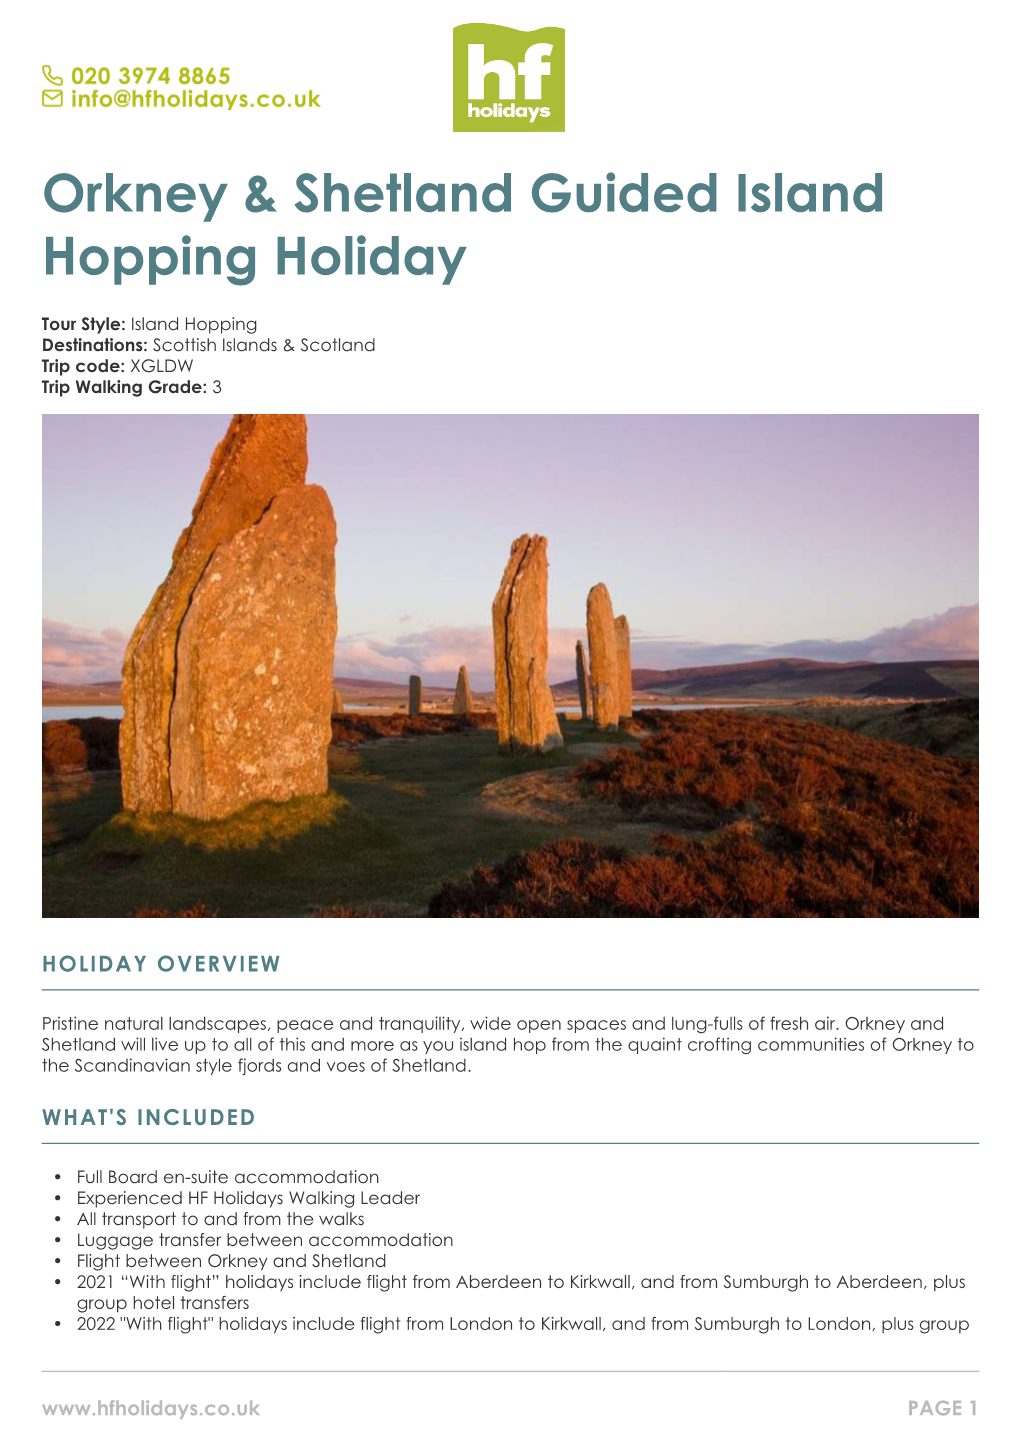 Orkney & Shetland Guided Island Hopping Holiday